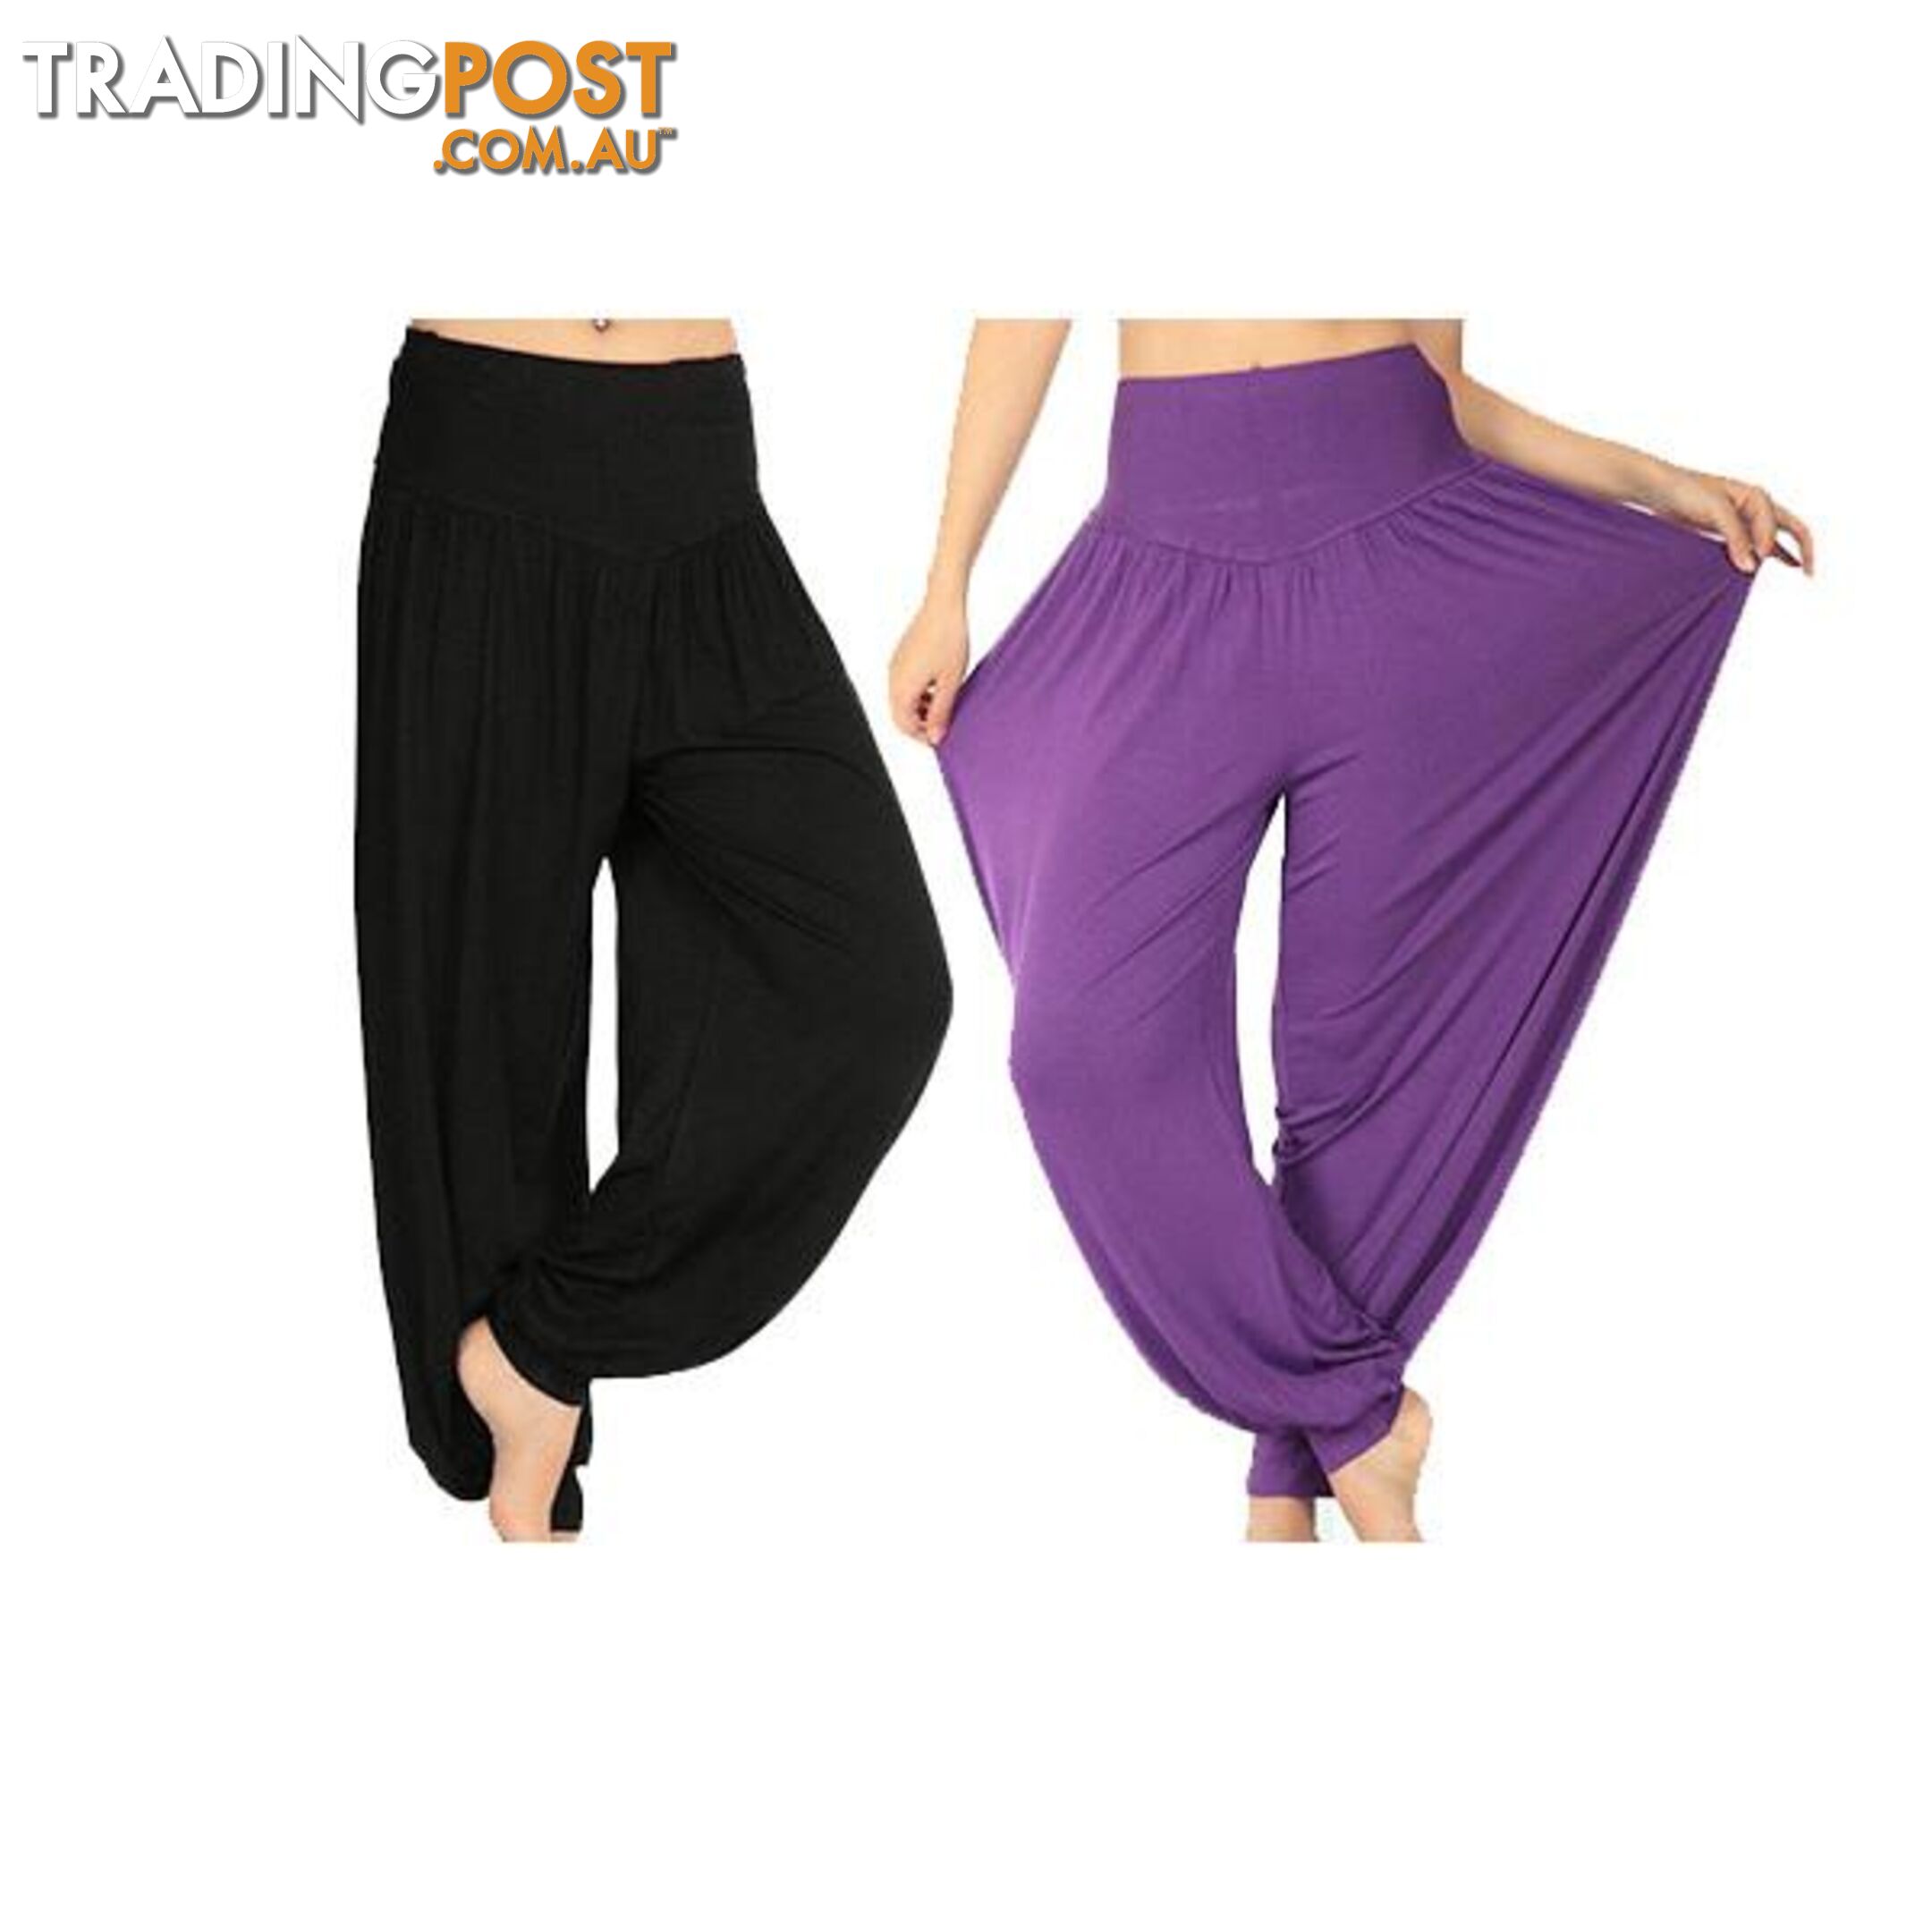 Comfy Yoga Pants - Unbranded - 7427005866005